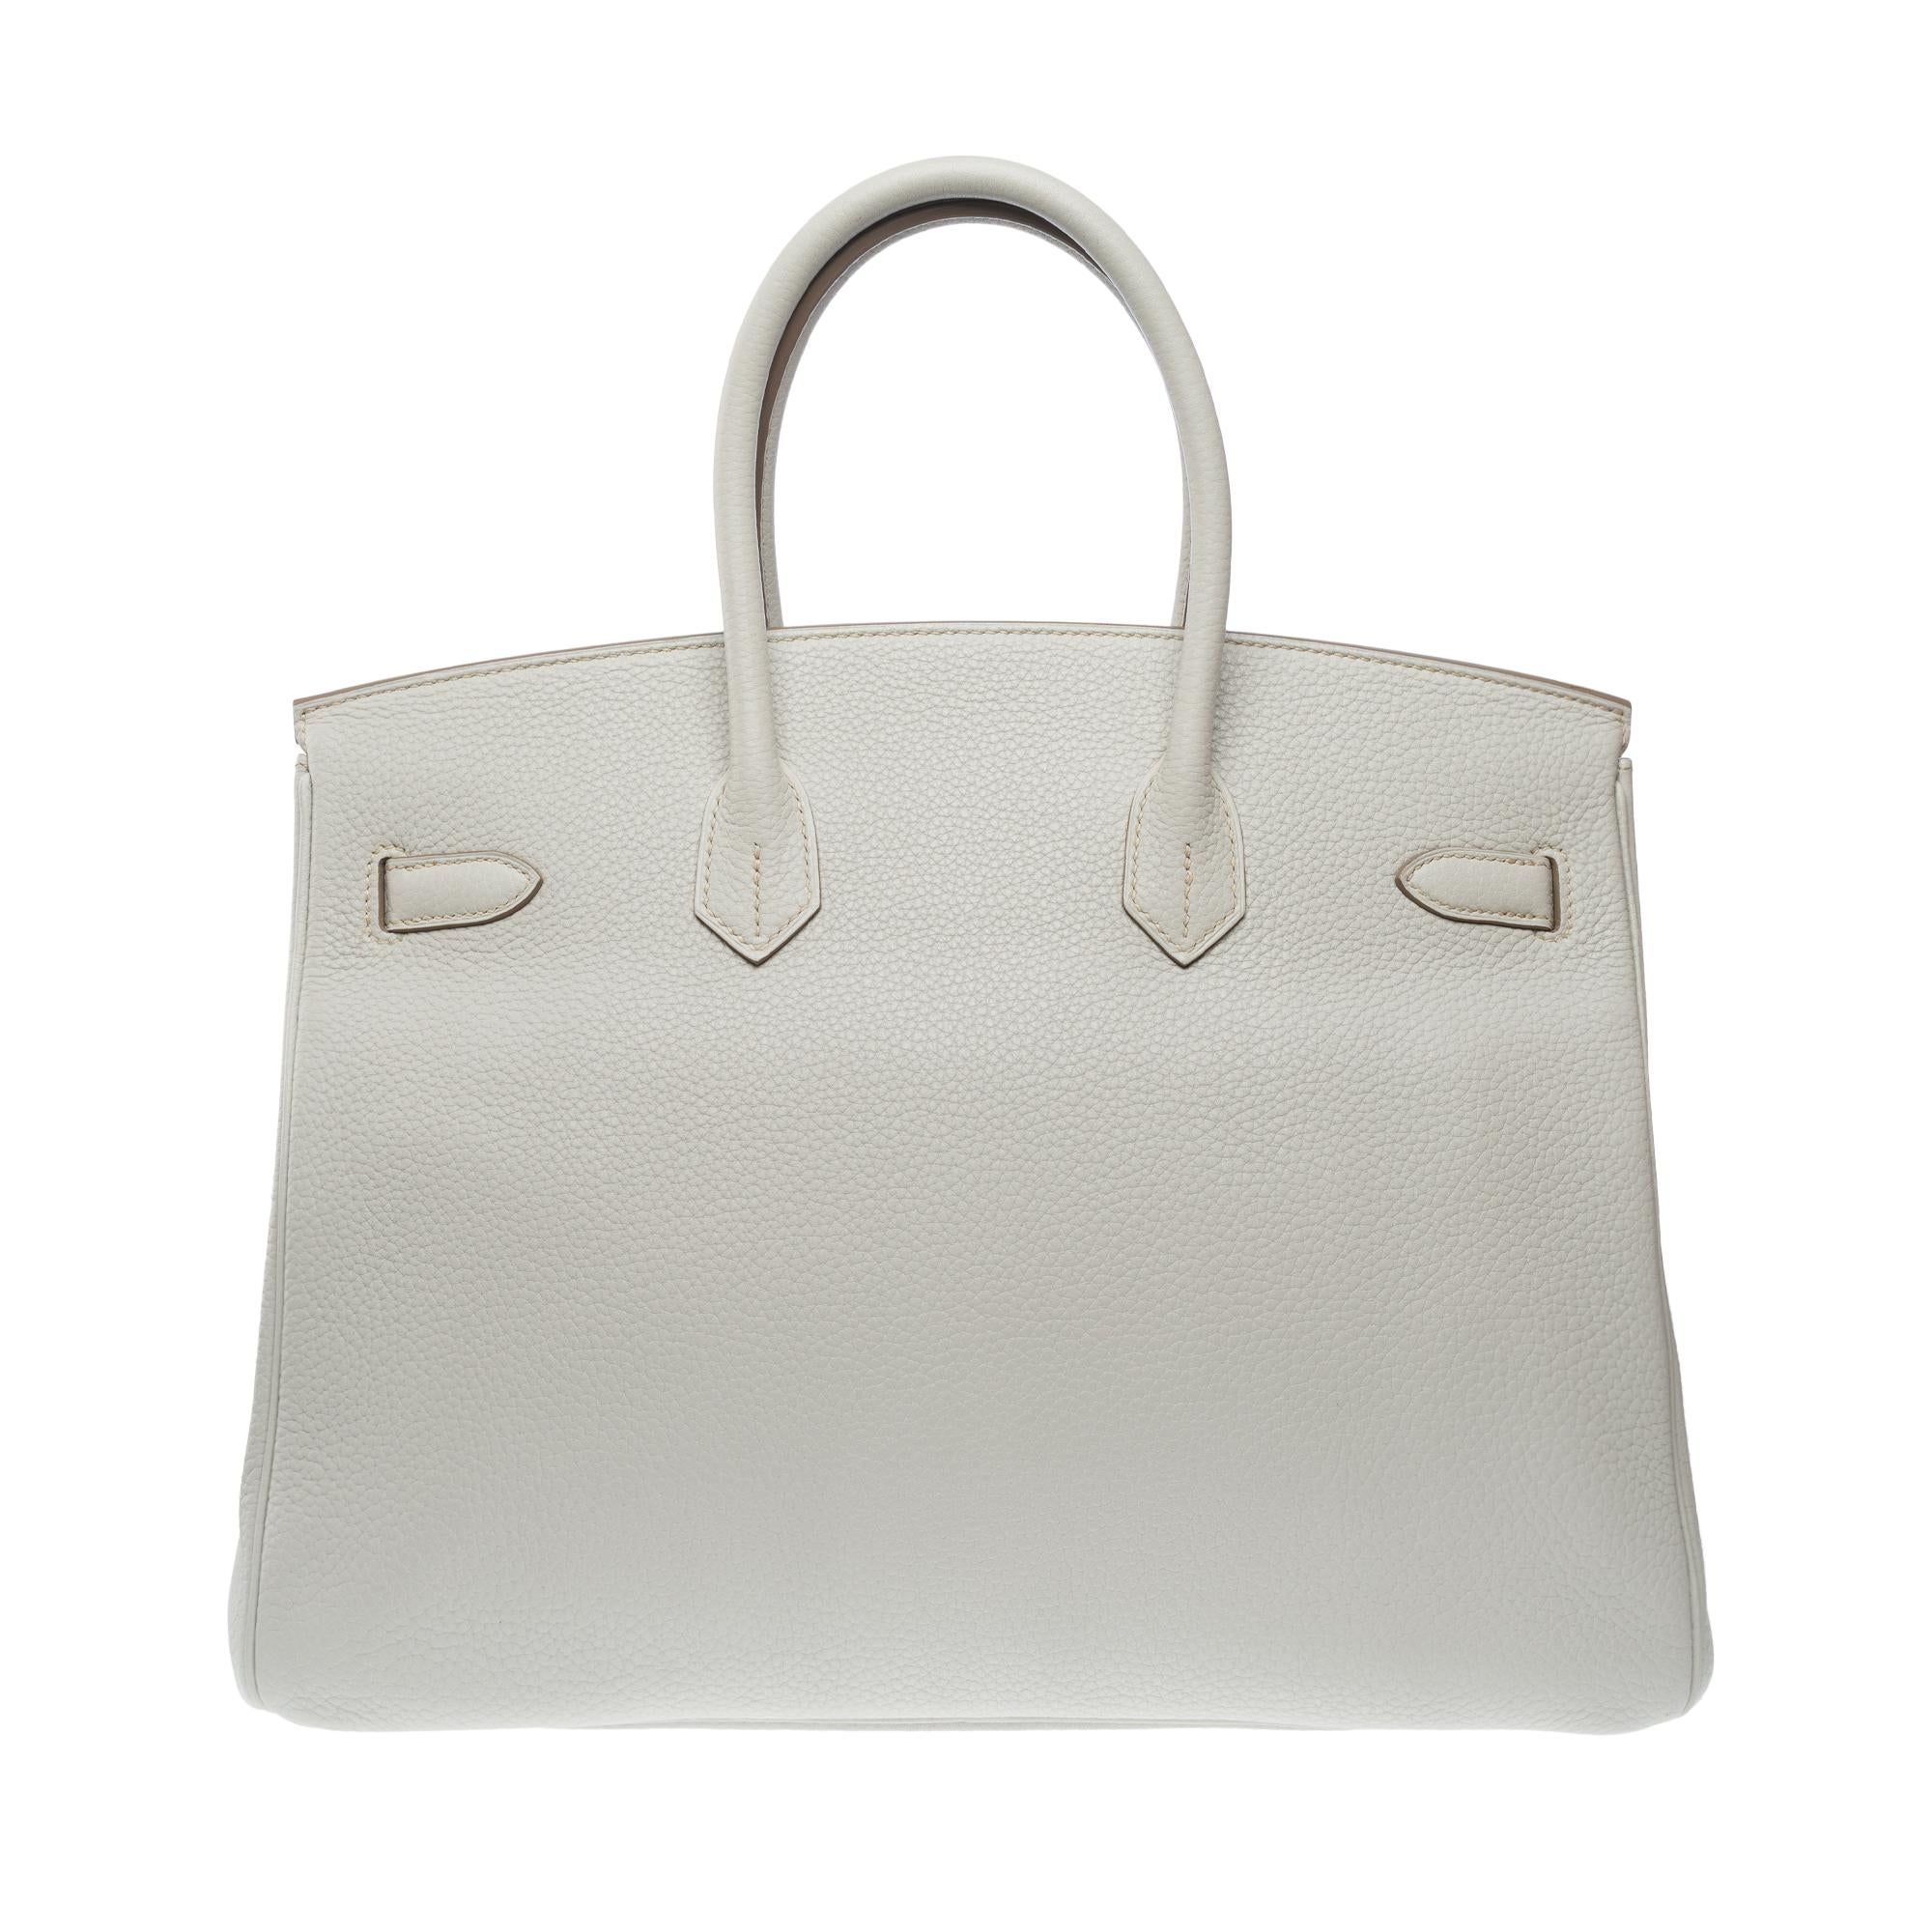 Rare Hermès Birkin Club 35 handbag in grey, white leather and blue lizard, SHW For Sale 1